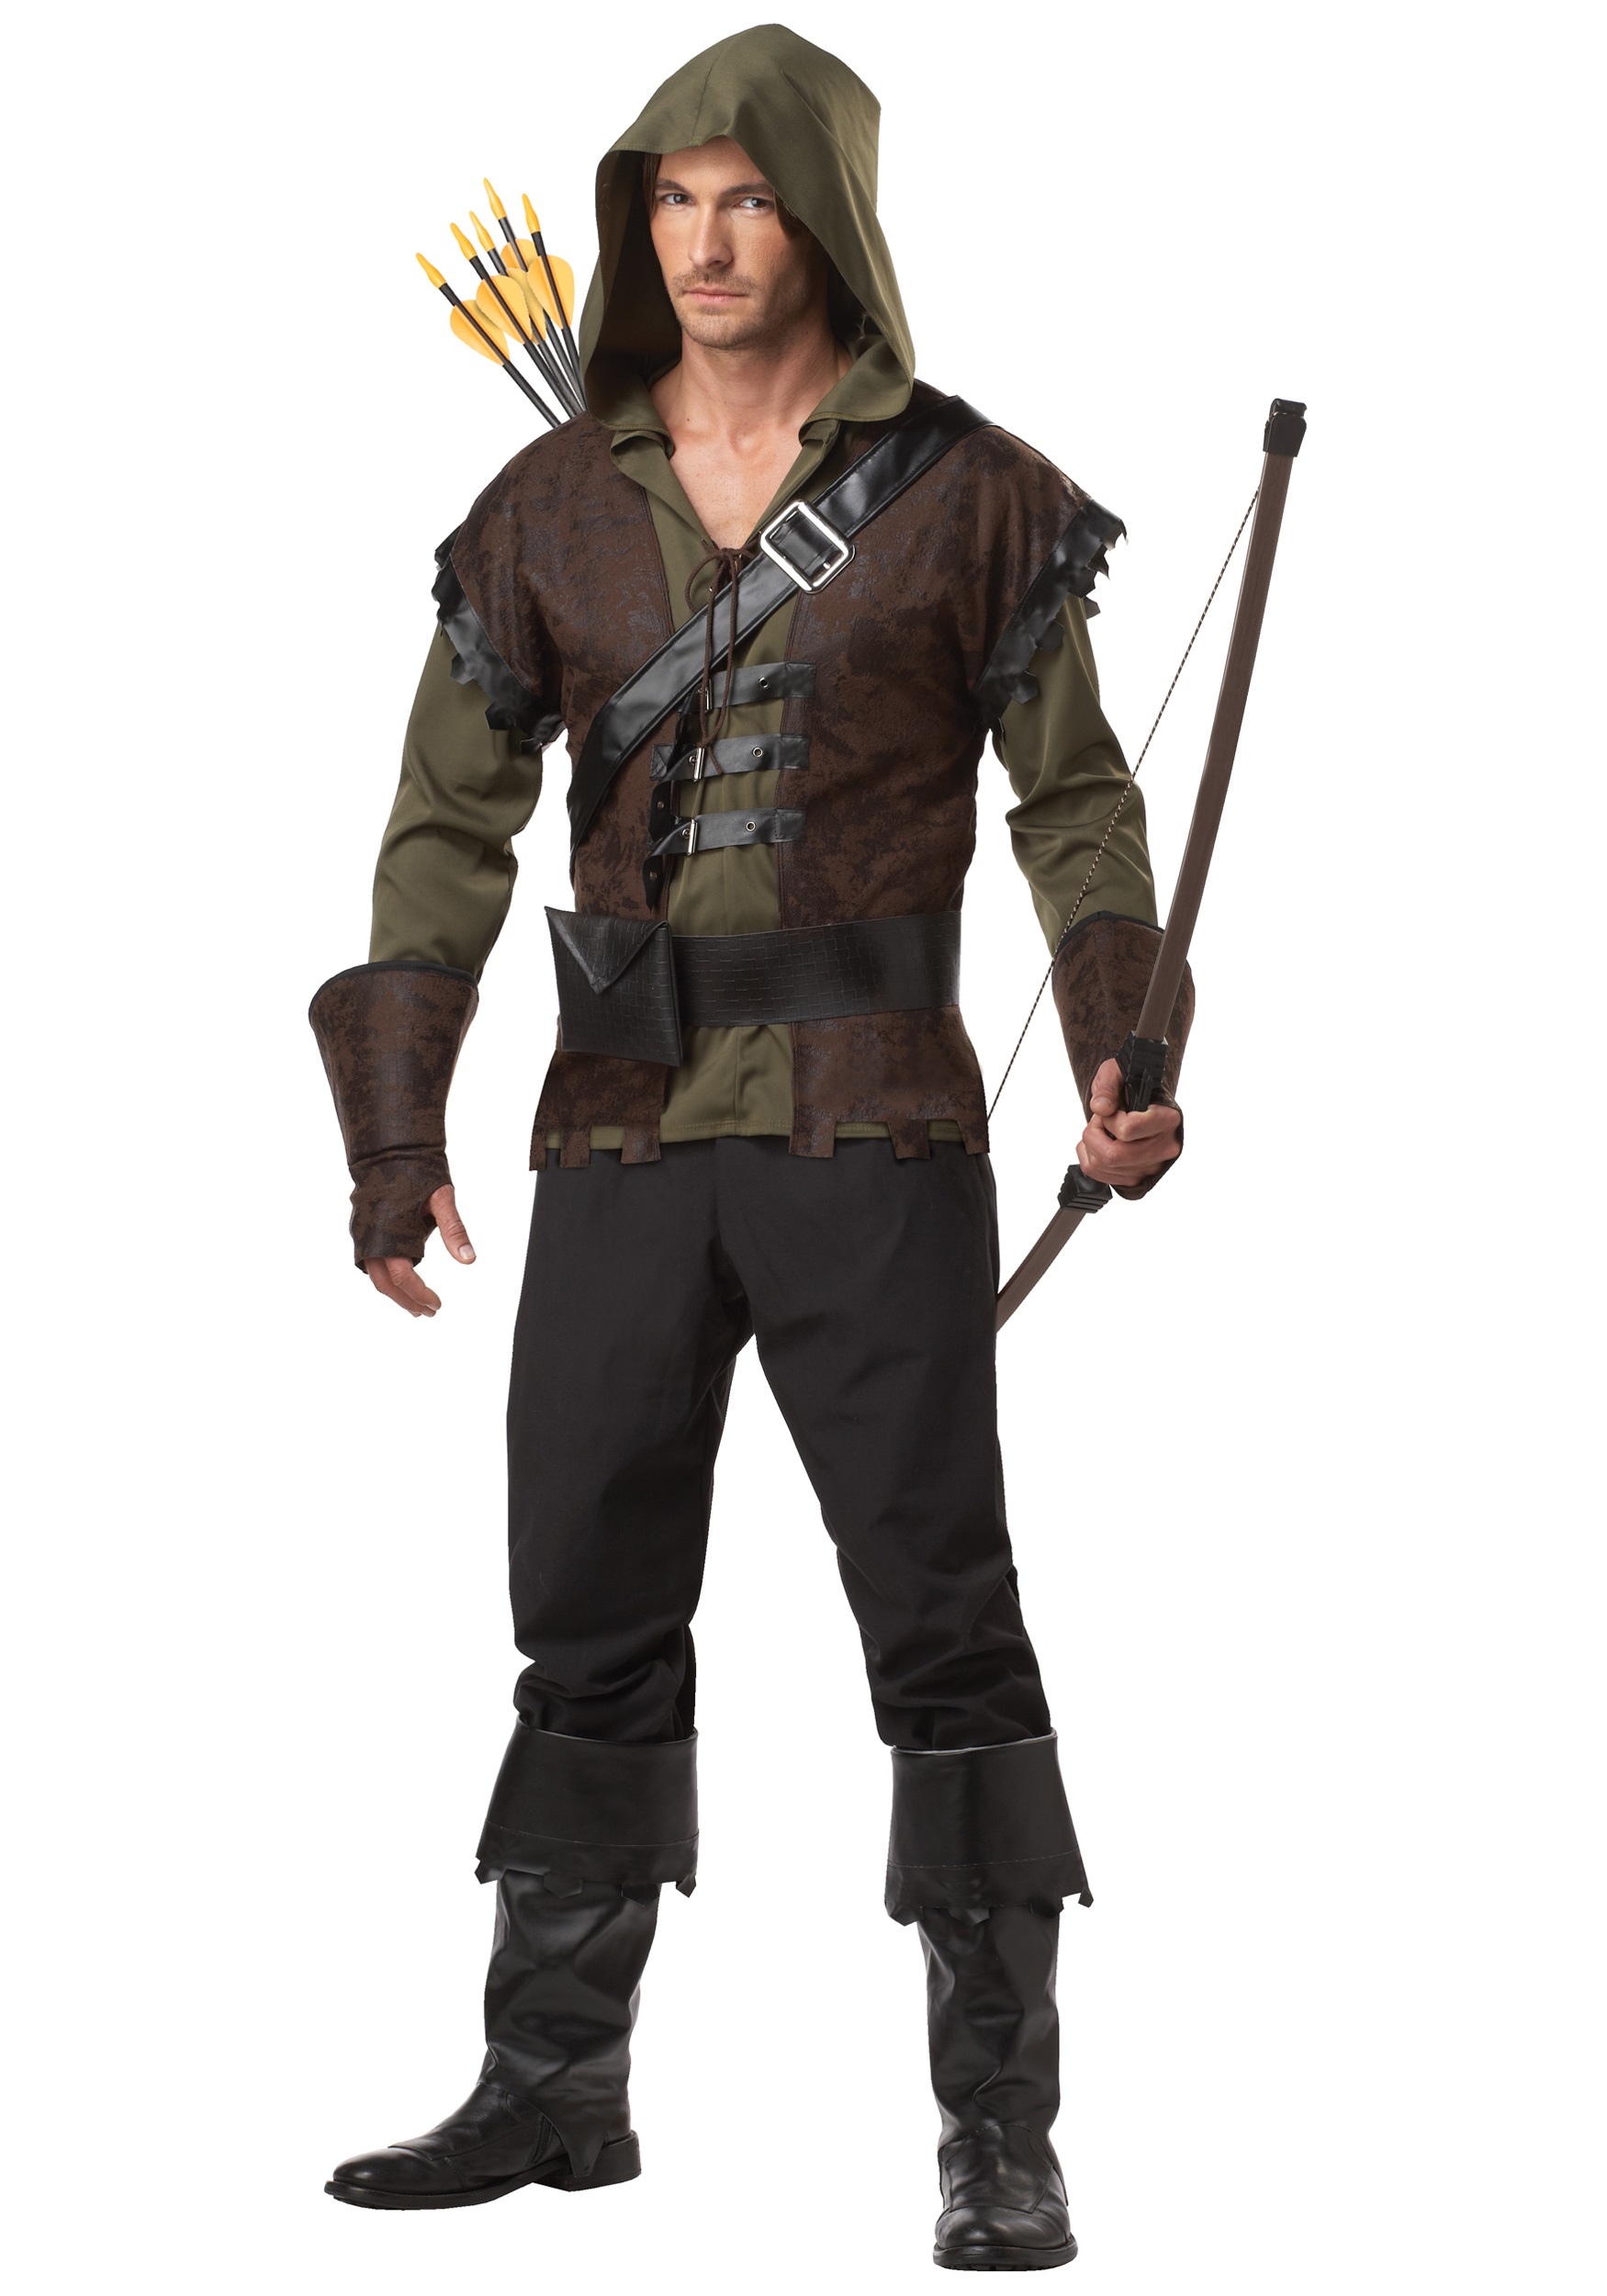 Realistic Robin Hood Costume for Men